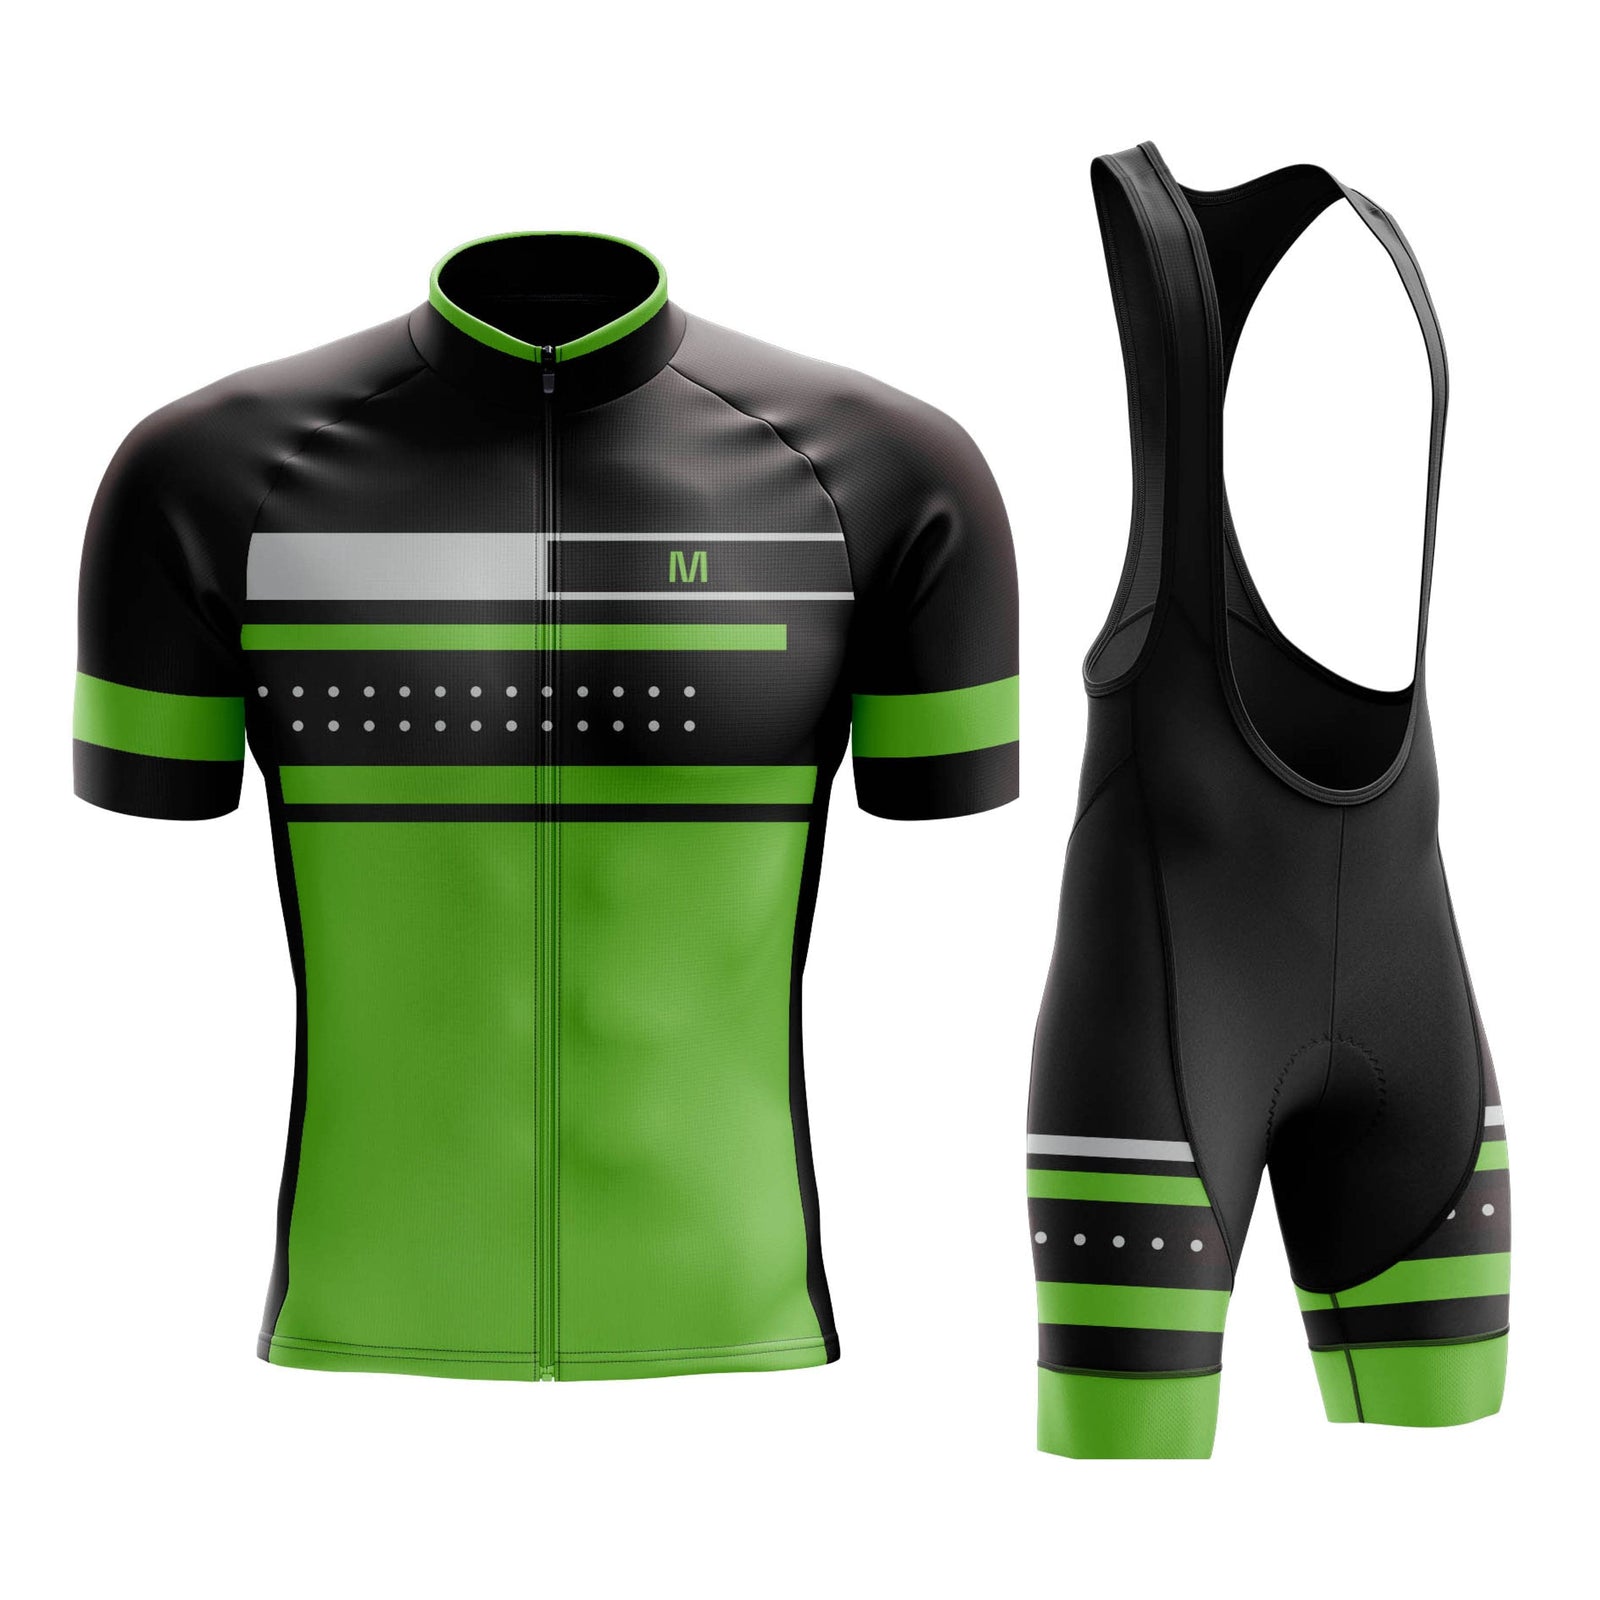 Montella Cycling Cycling Kit Men's Green Speed Cycling Jersey or Bibs